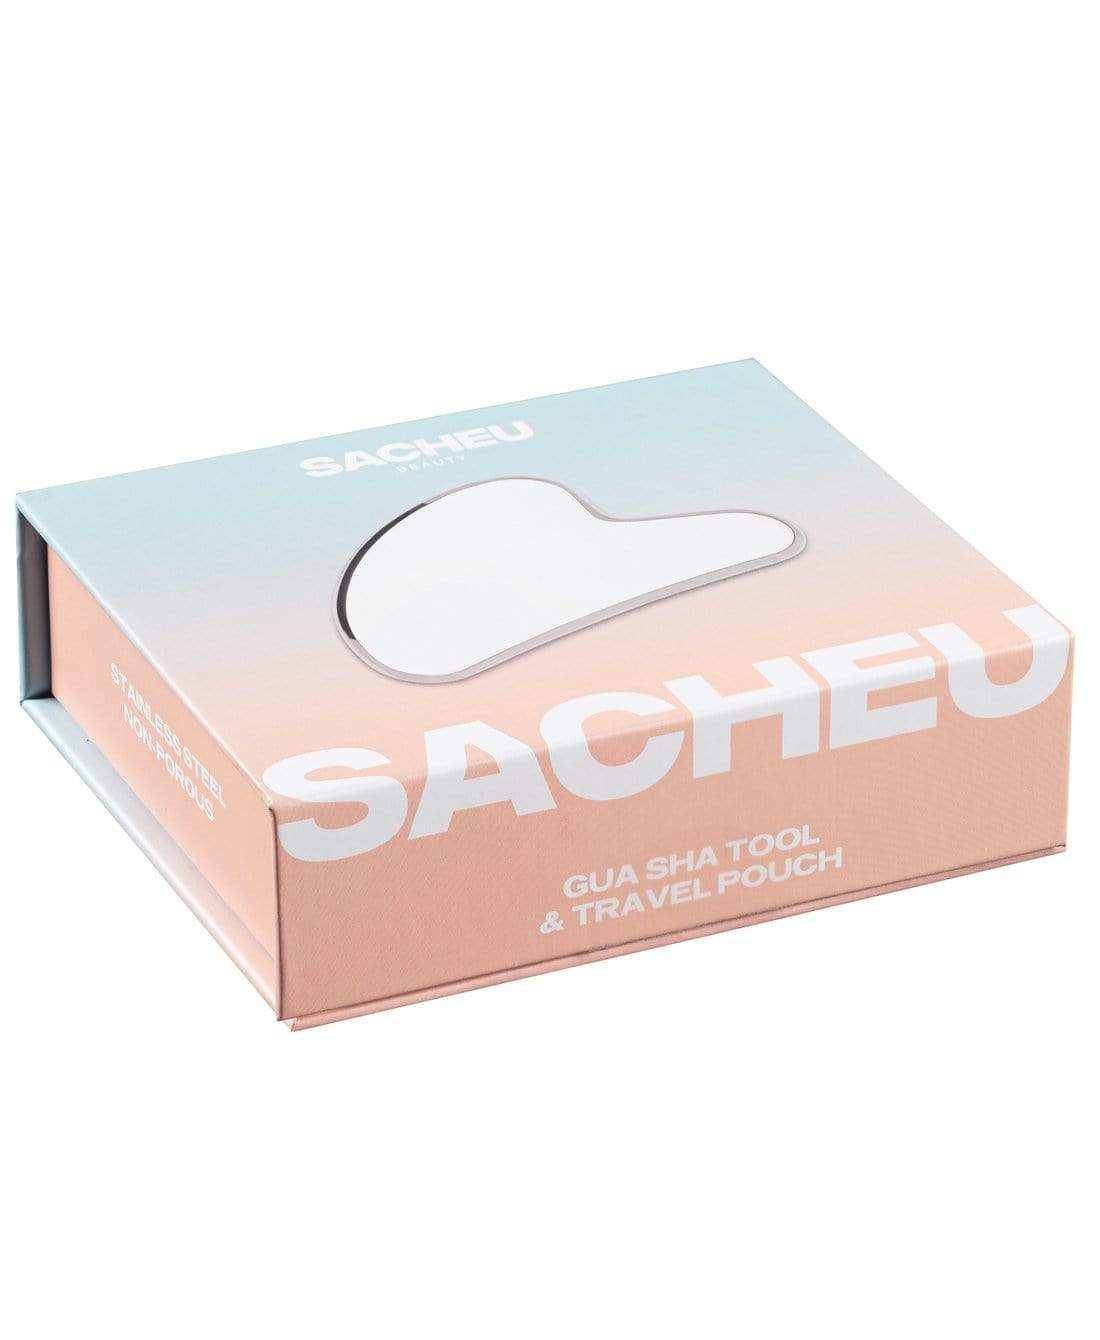 GUA SHA - STAINLESS STEEL | SACHEU Beauty.